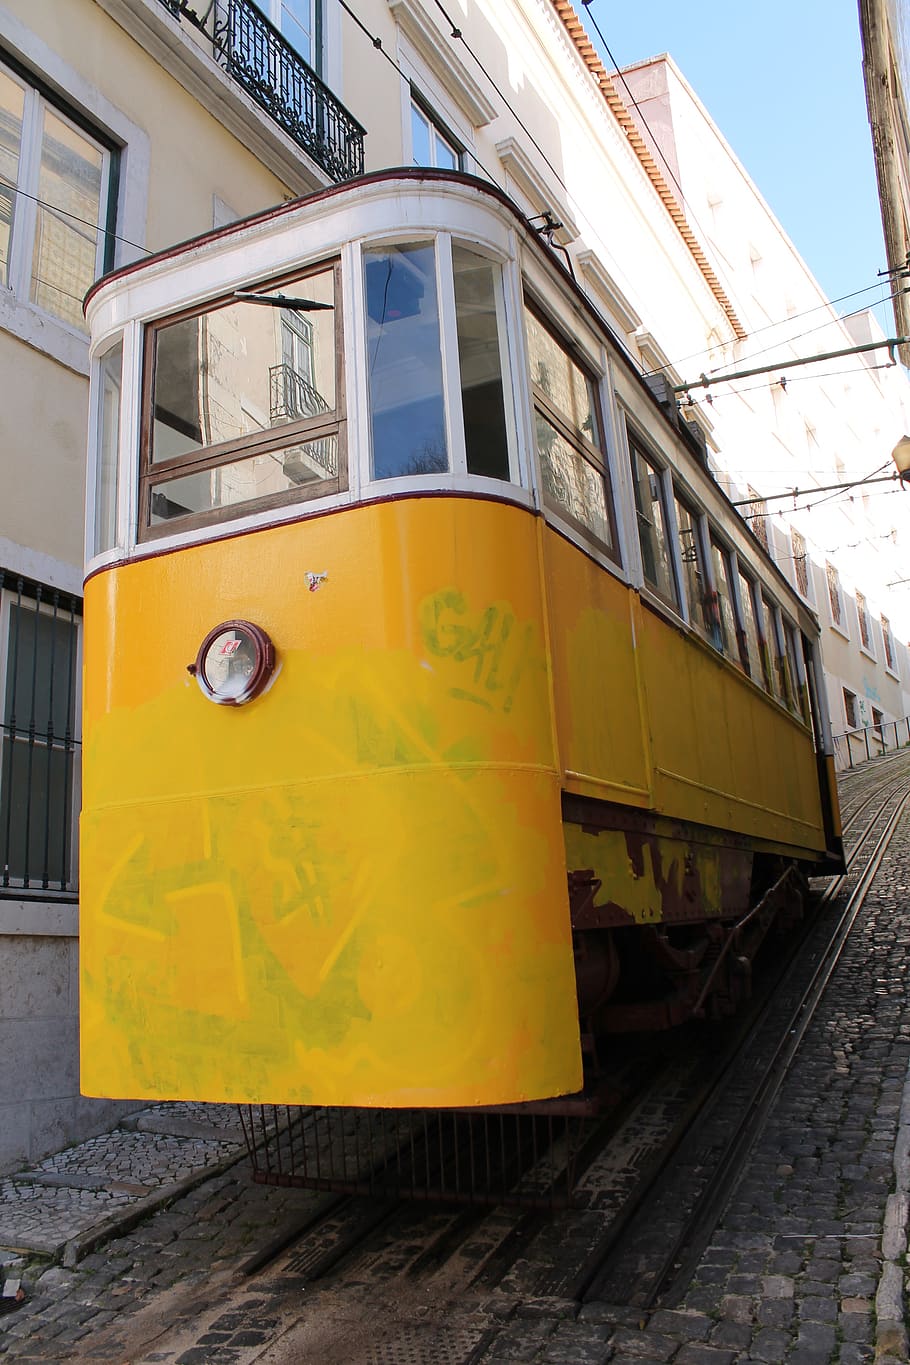 lisbon, portugal, europe, tourism, railway, historic, street, tram, rail transportation, yellow